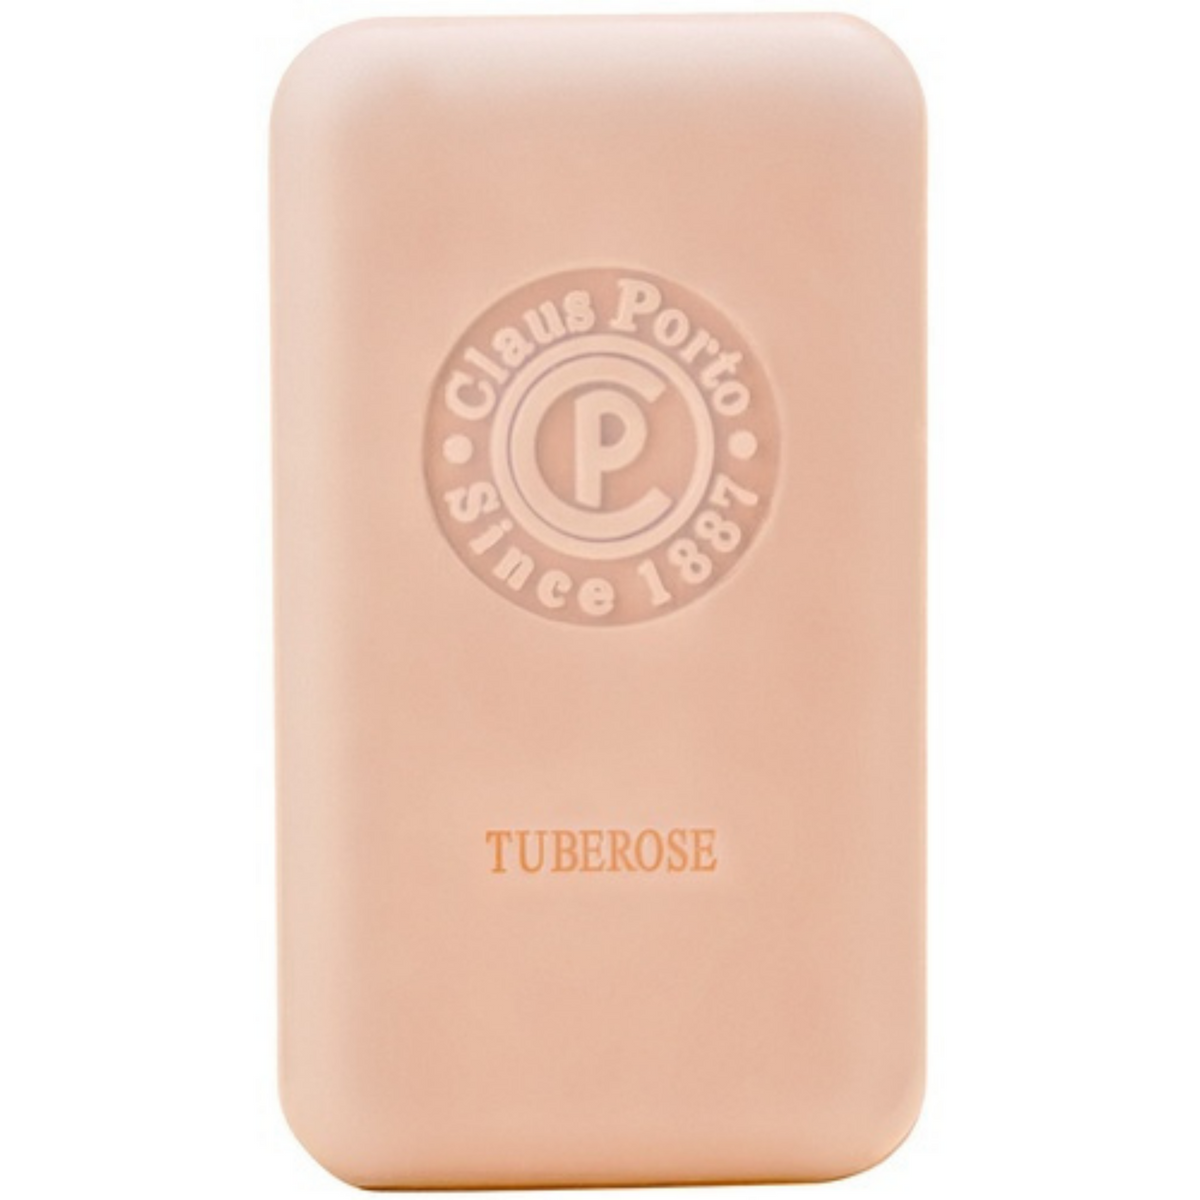 Claus Porto Black Sumburst Tuberose Soap (150 g) #10085022